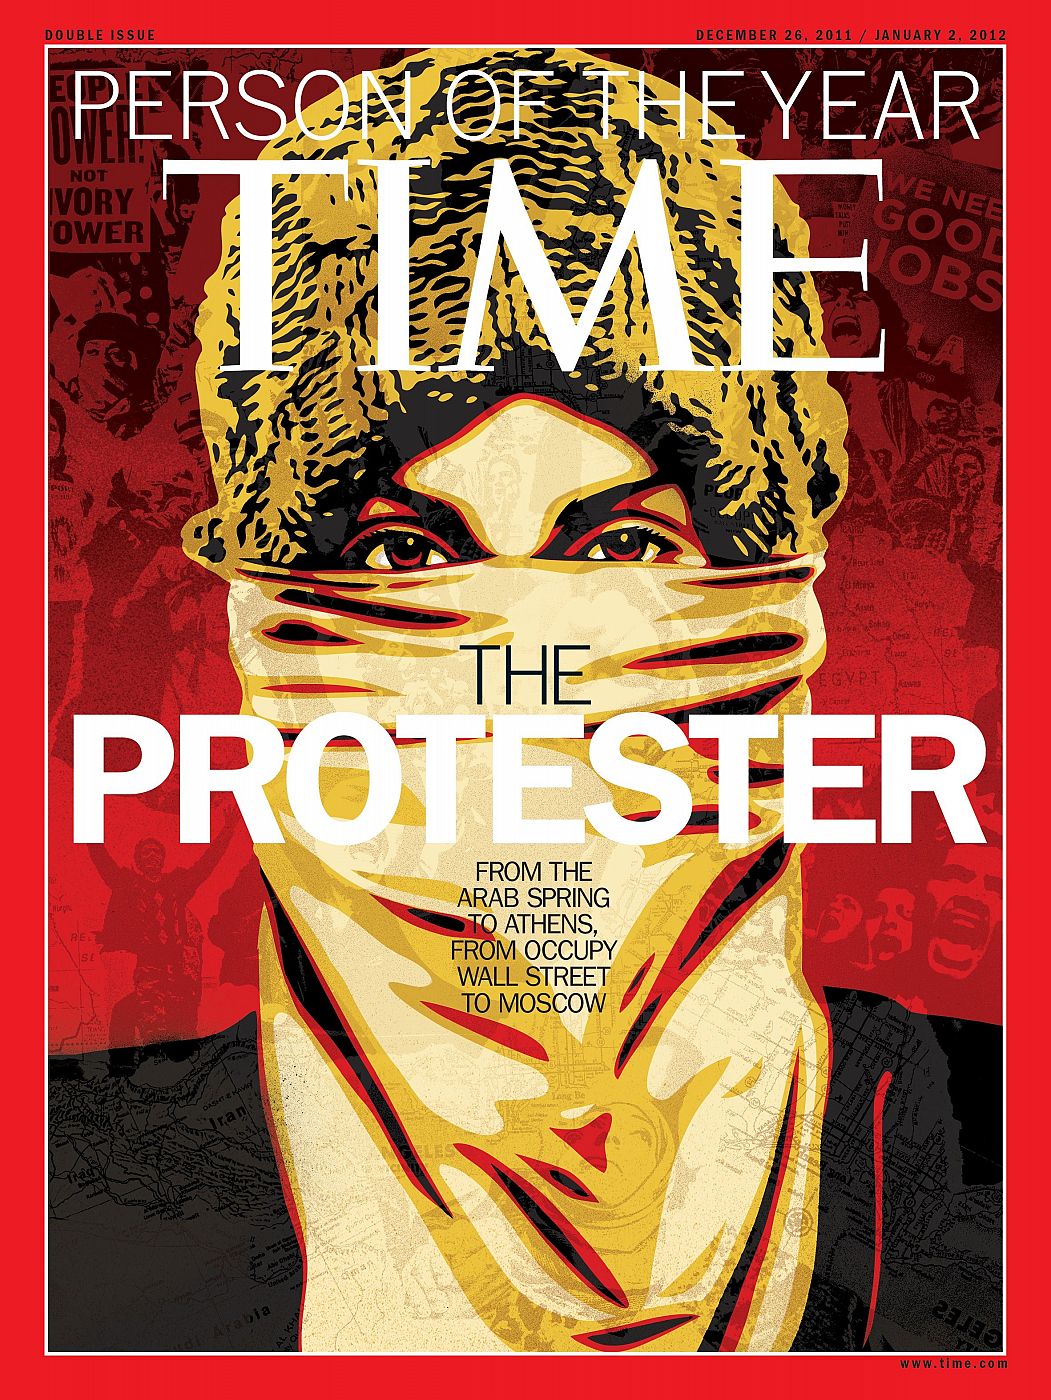 Imagen de la portada de Time sobre el personaje de 2011.